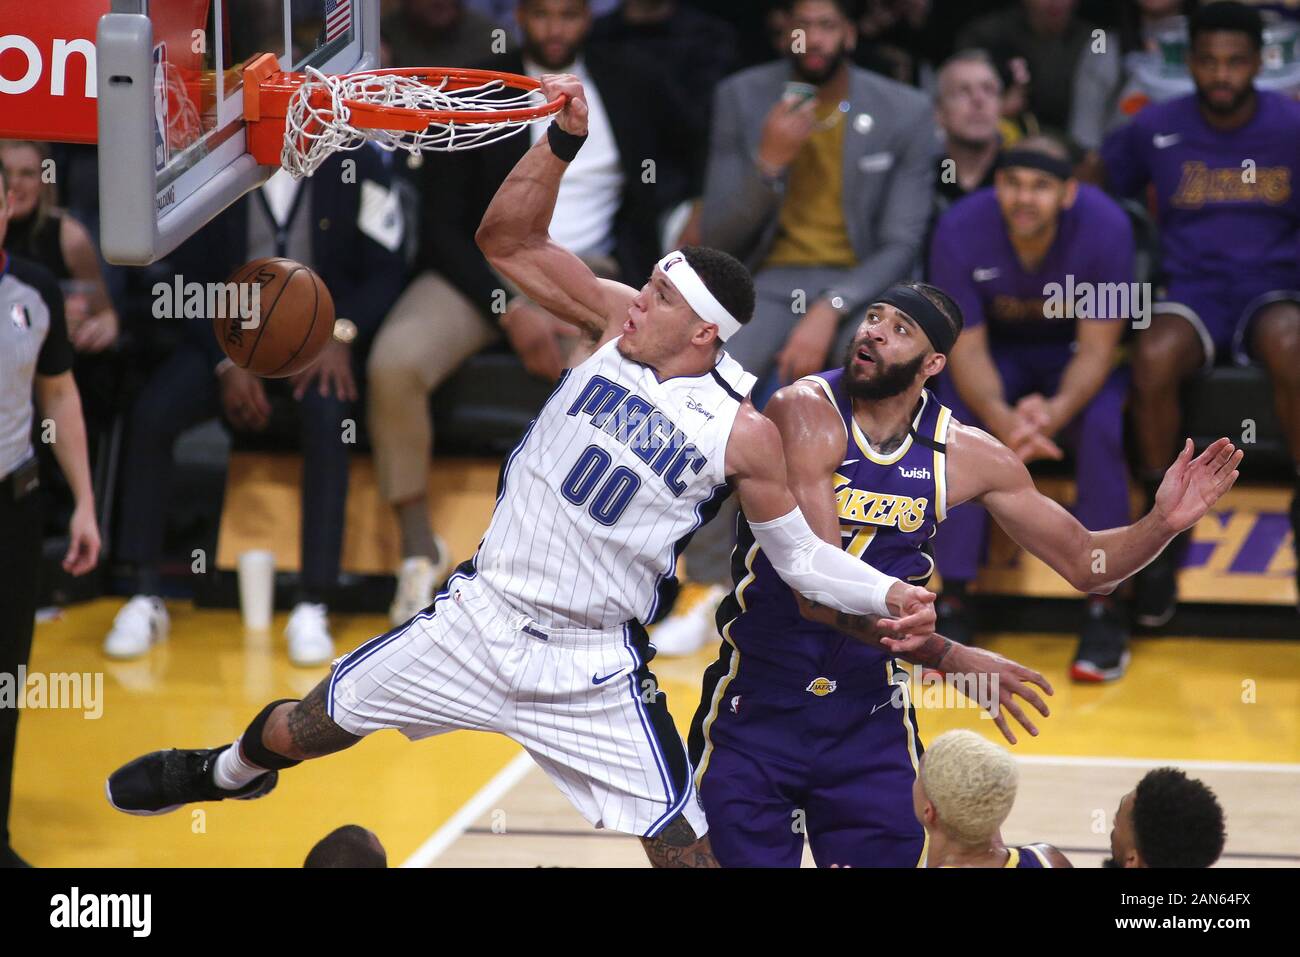 Photo: Dallas Mavericks Dwight Powell dunks past Los Angeles Lakers JaVale  McGee - LAP20191229815 